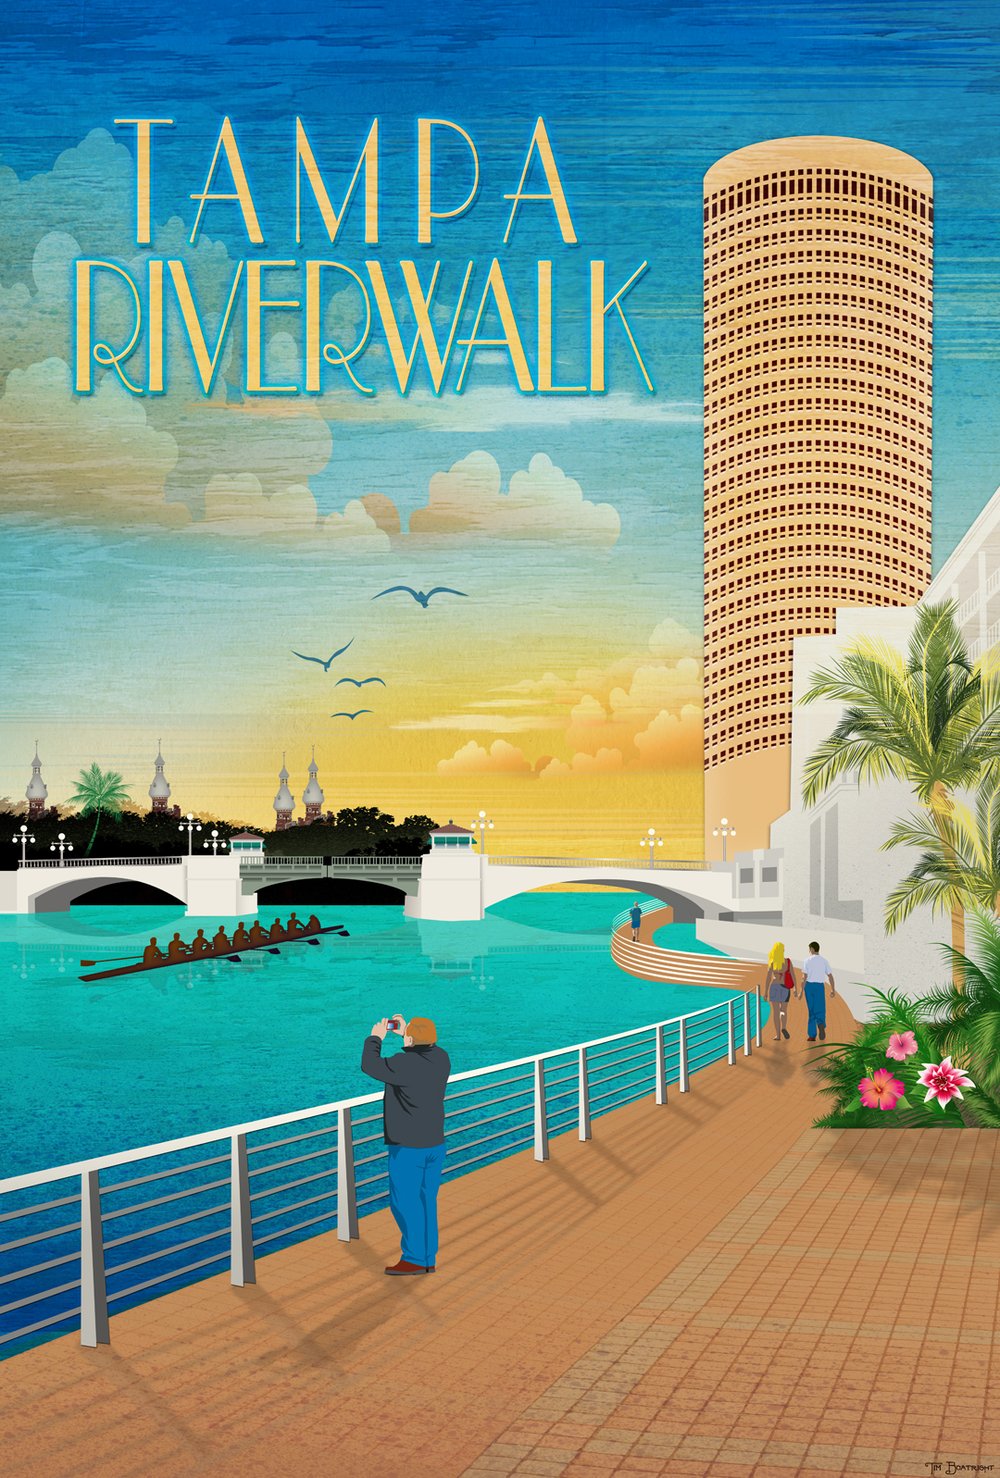 Image of Riverwalk